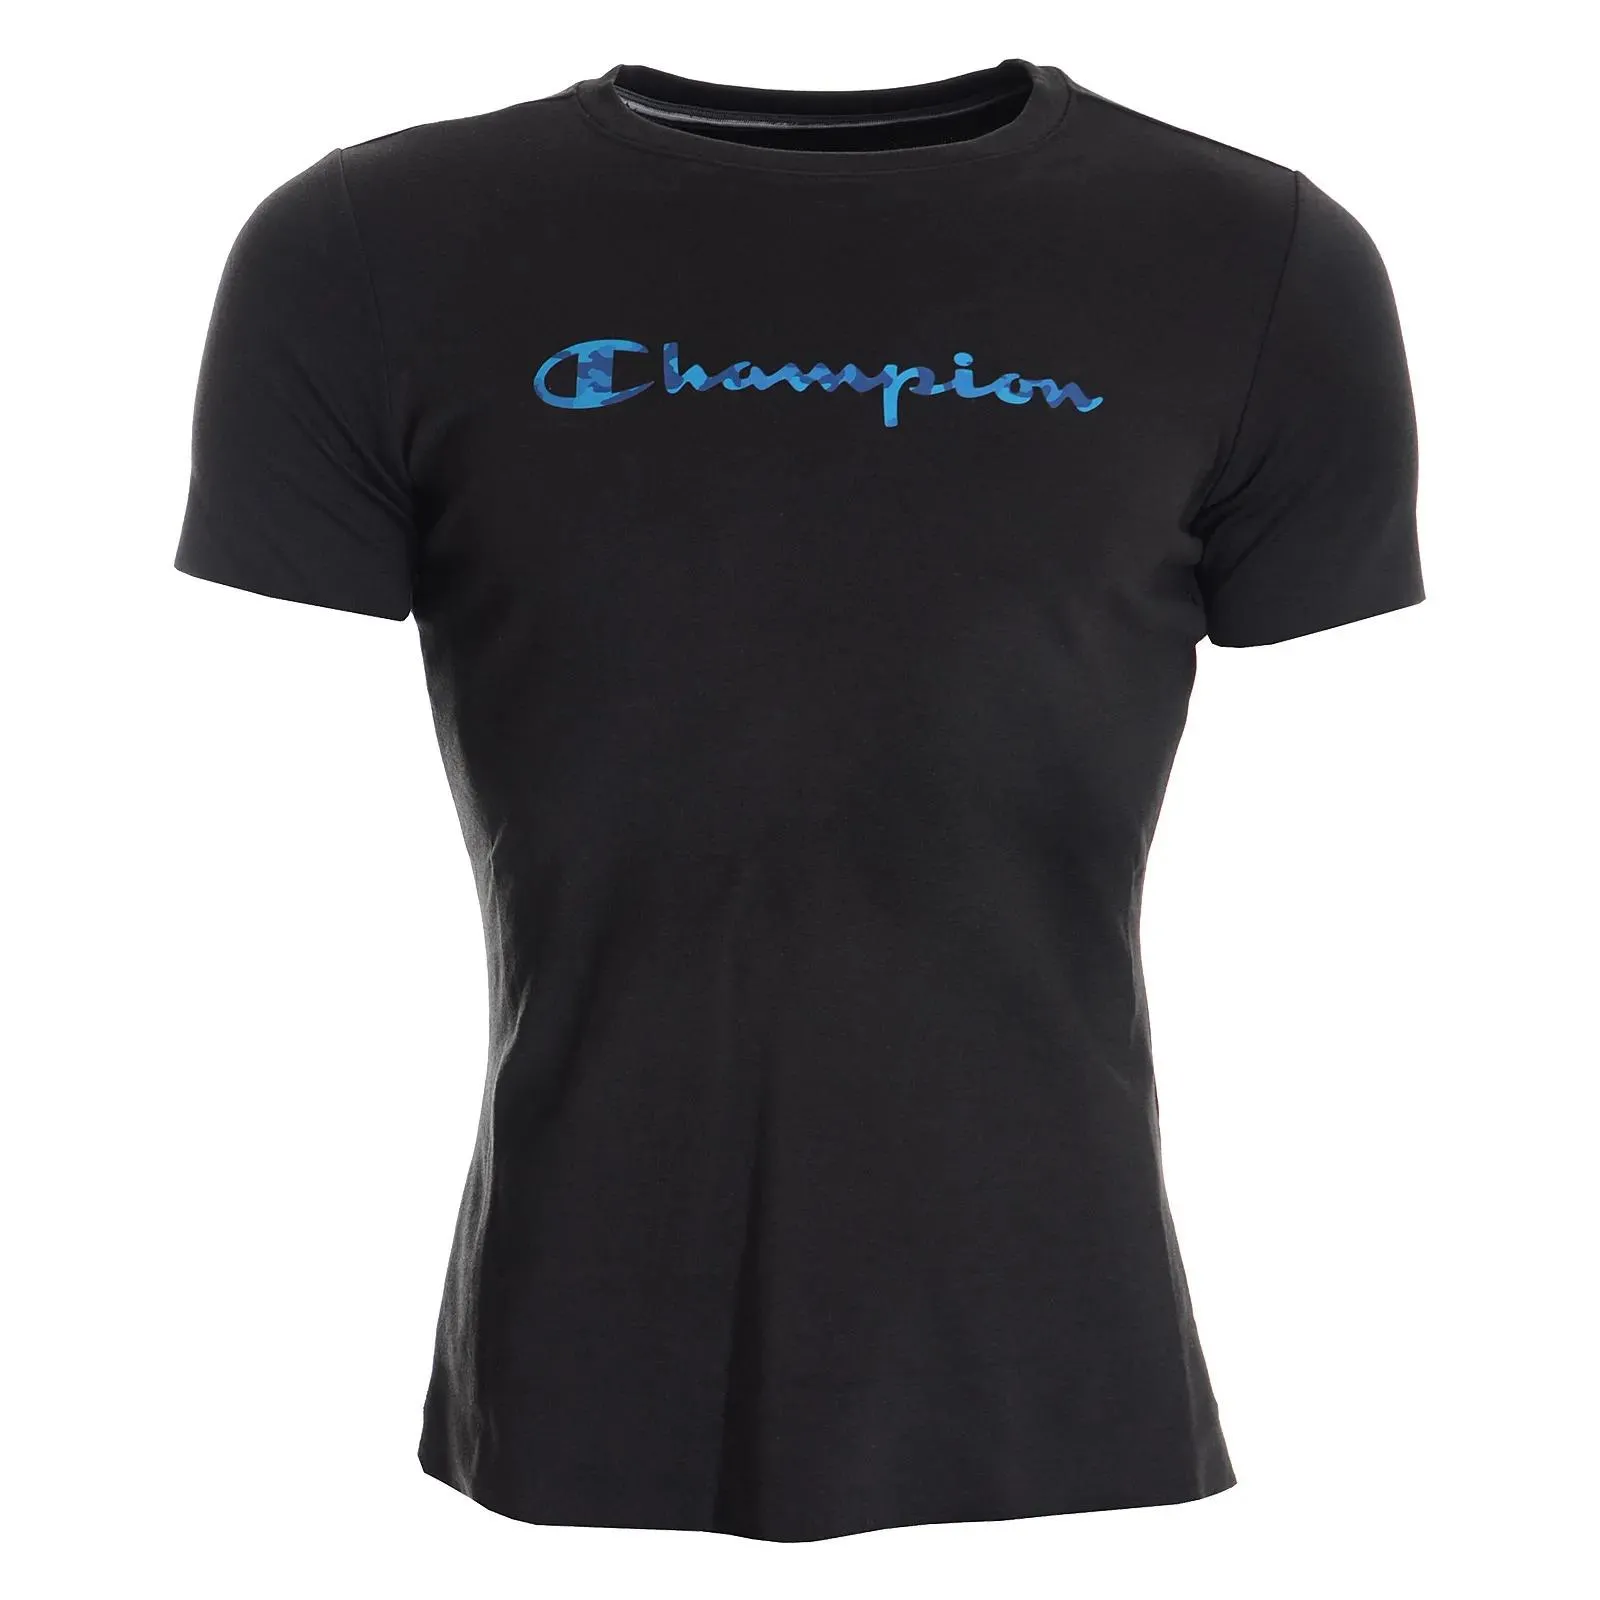 Champion T-shirt TECH 